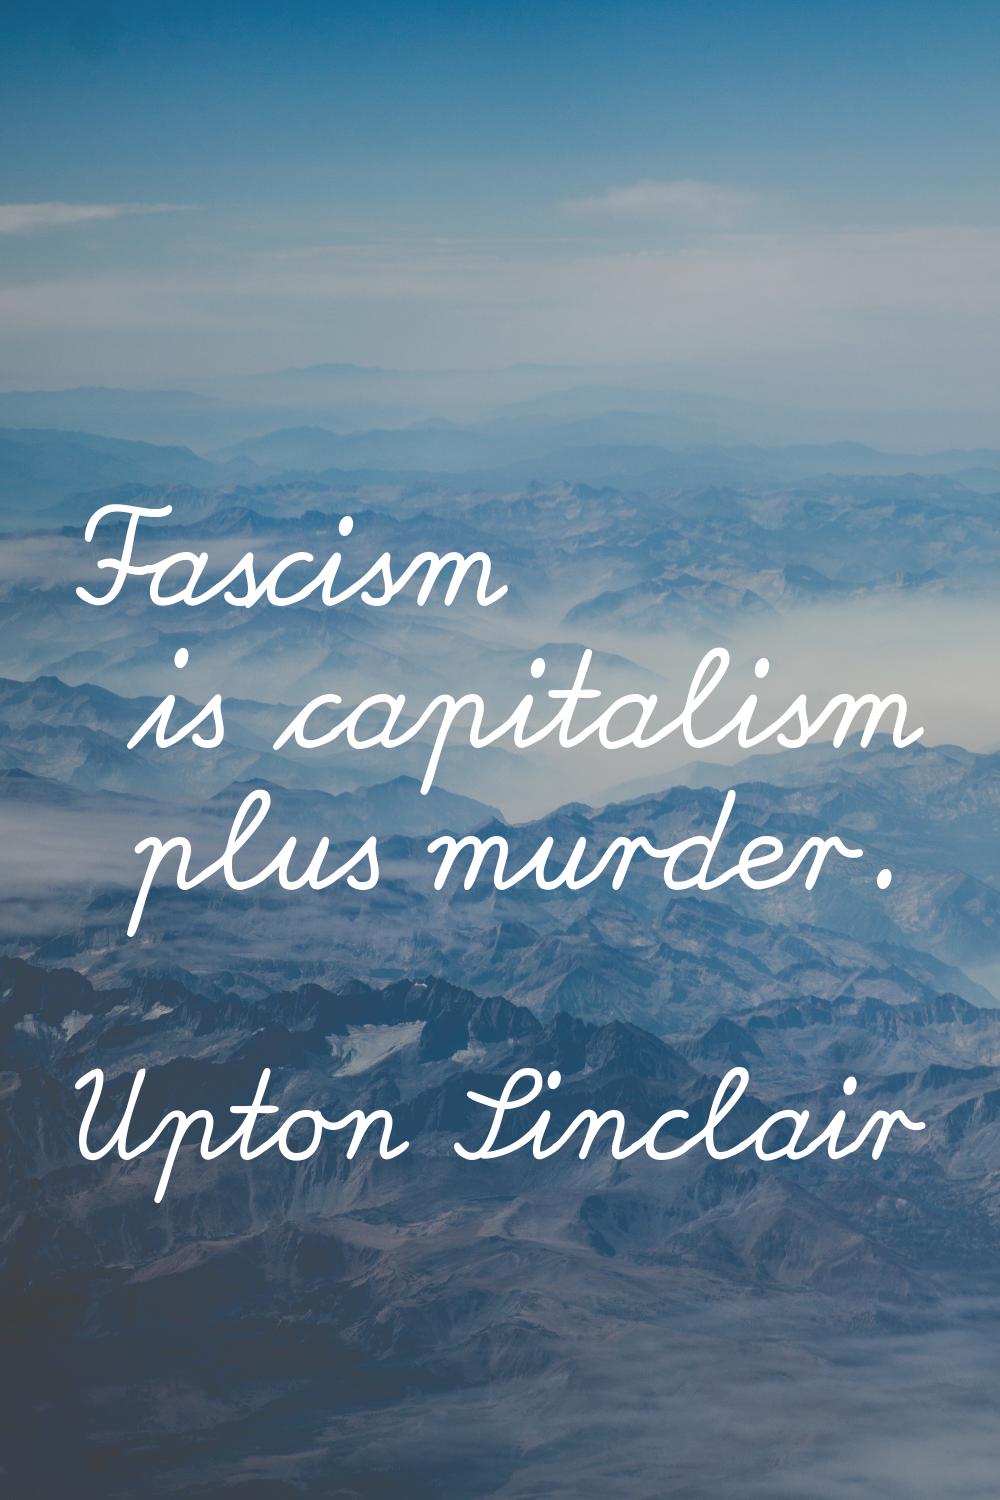 Fascism is capitalism plus murder.